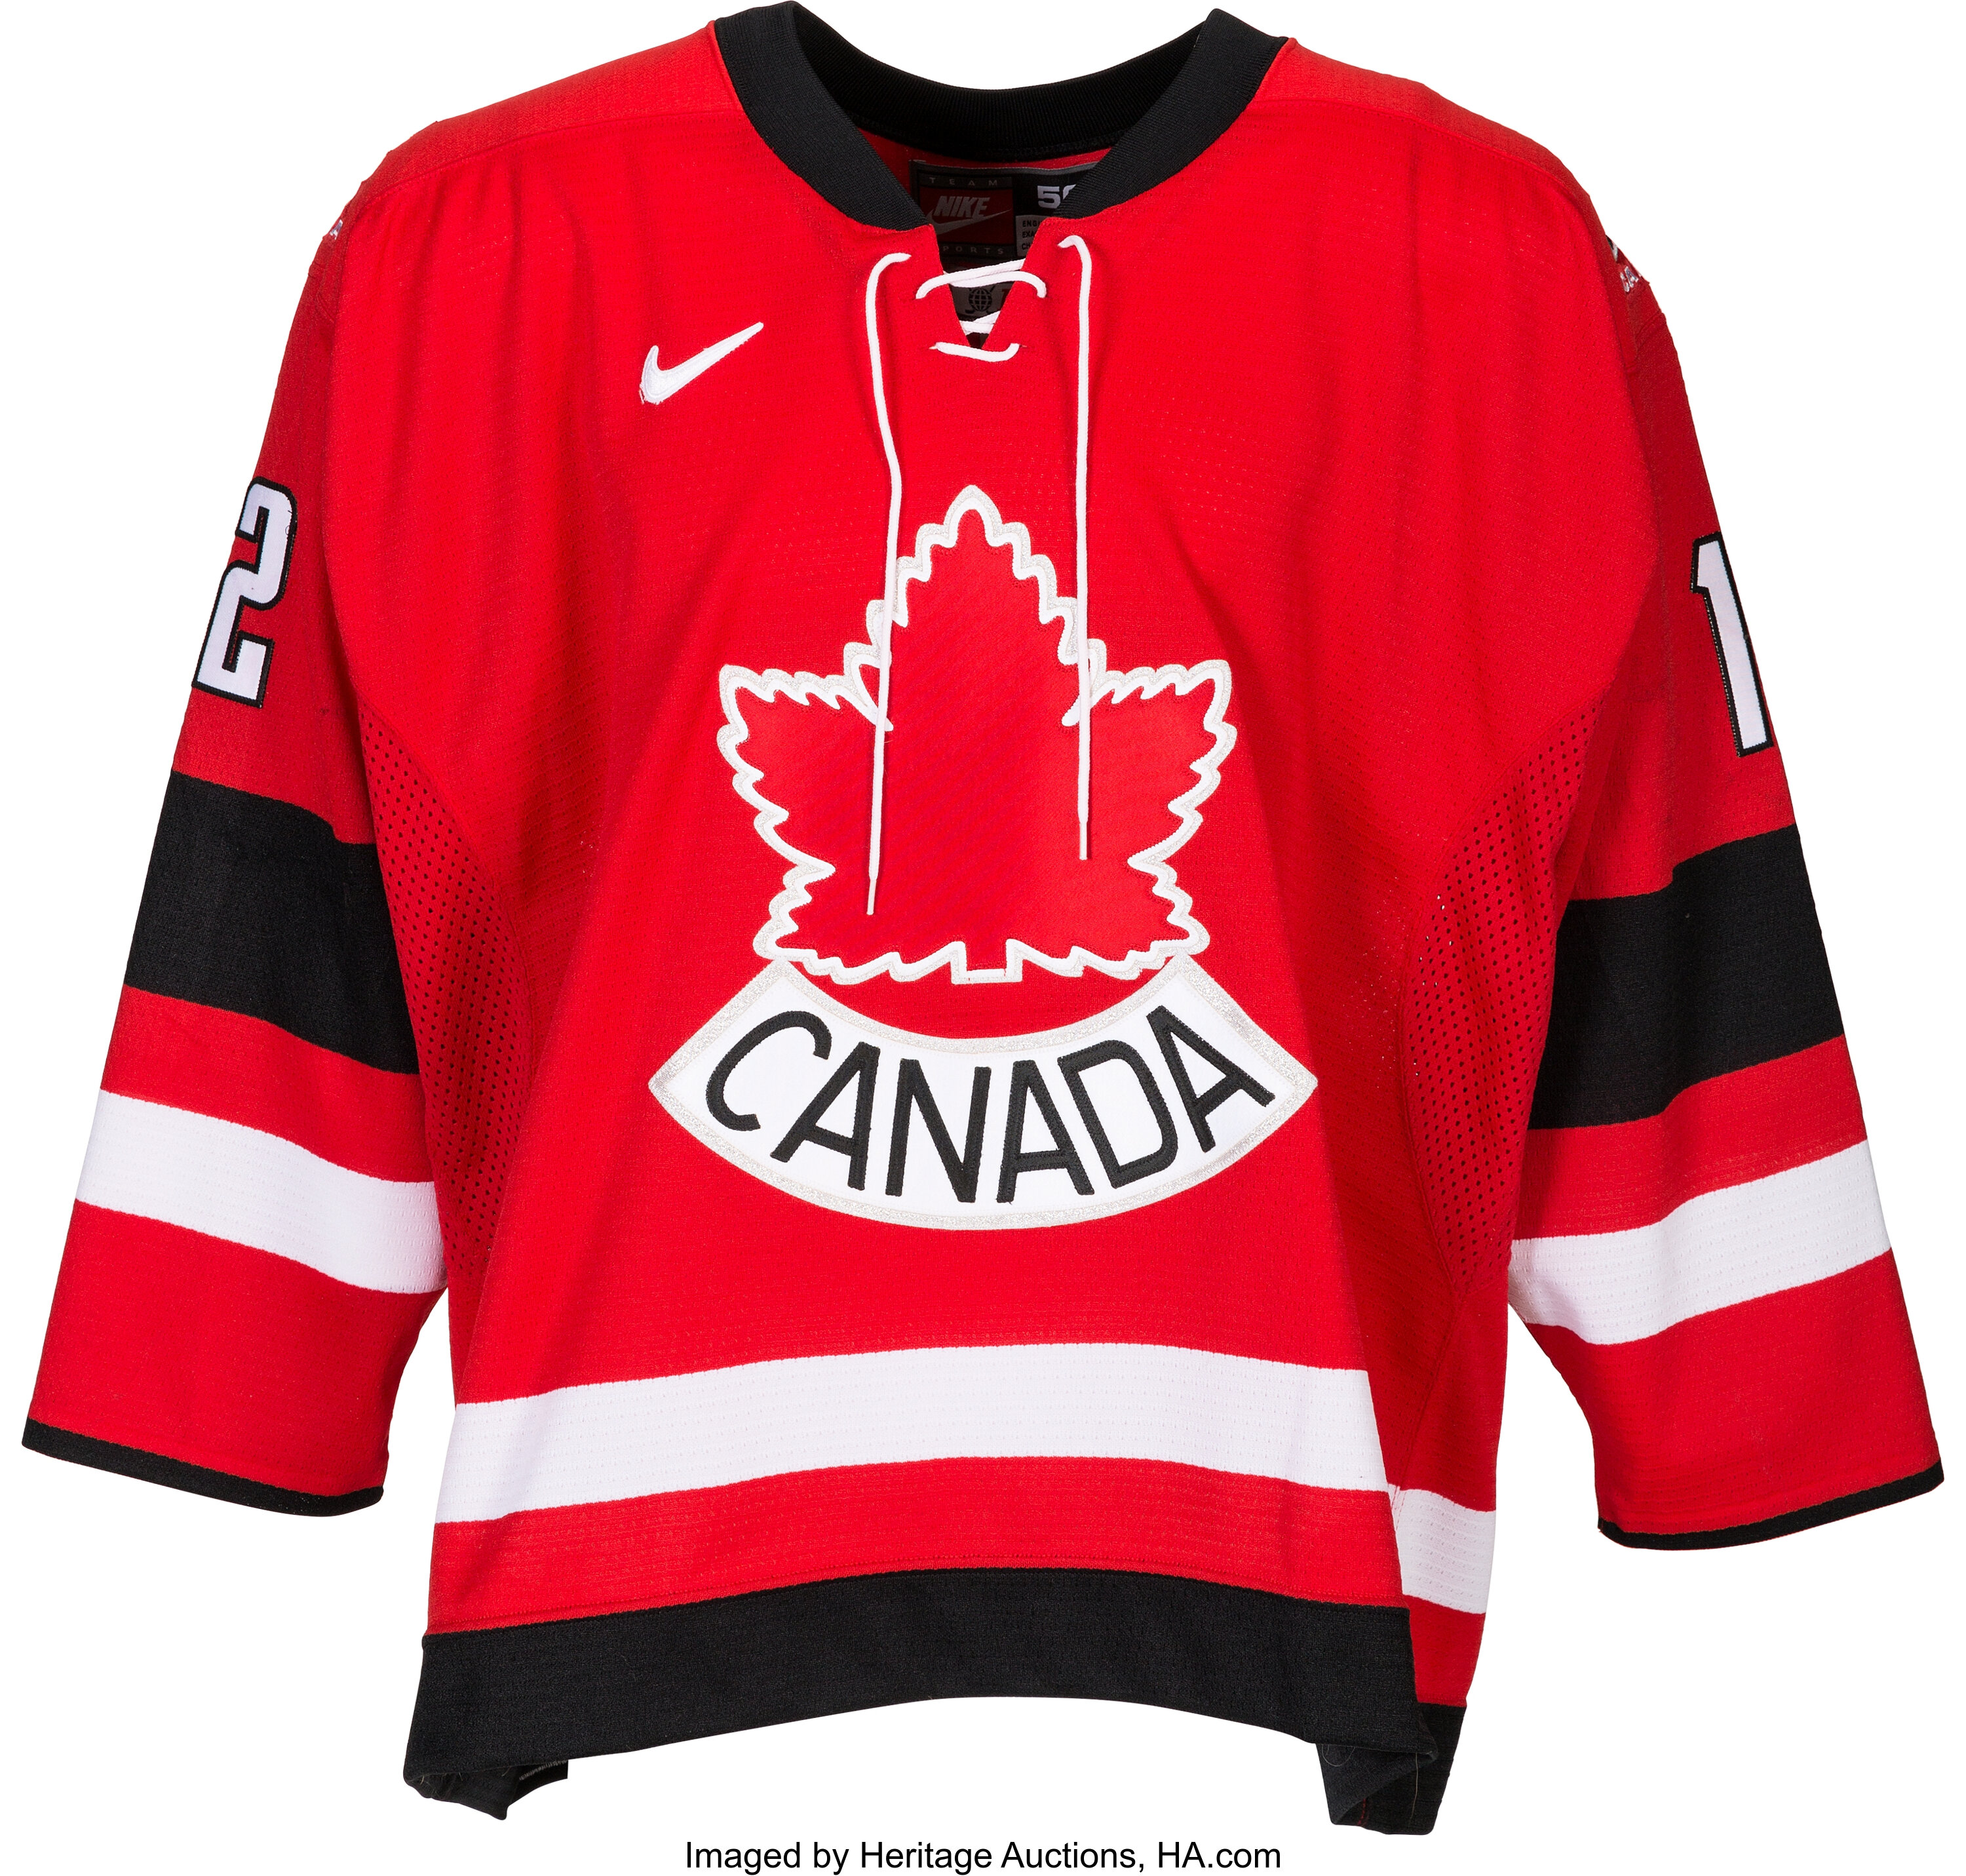 New Red (Black Logo) Nike Team Canada Olympic Hockey Jersey Large